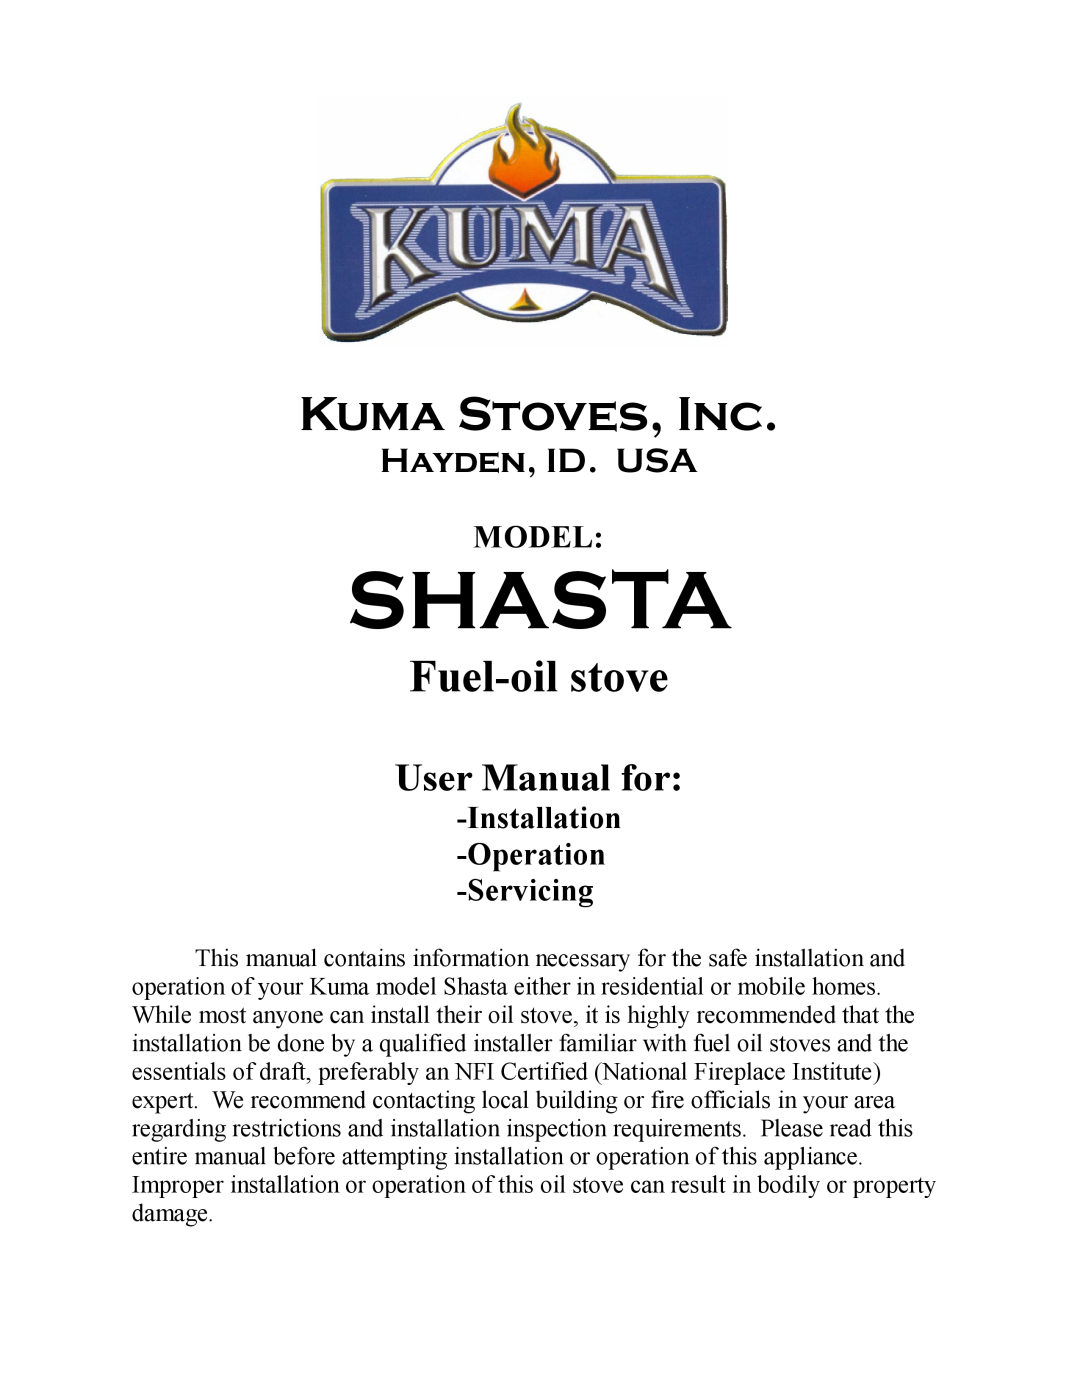 Kuma Stoves SHASTA user manual Model, Installation -Operation -Servicing, Shasta, Kuma Stoves, Inc, Fuel-oil stove 